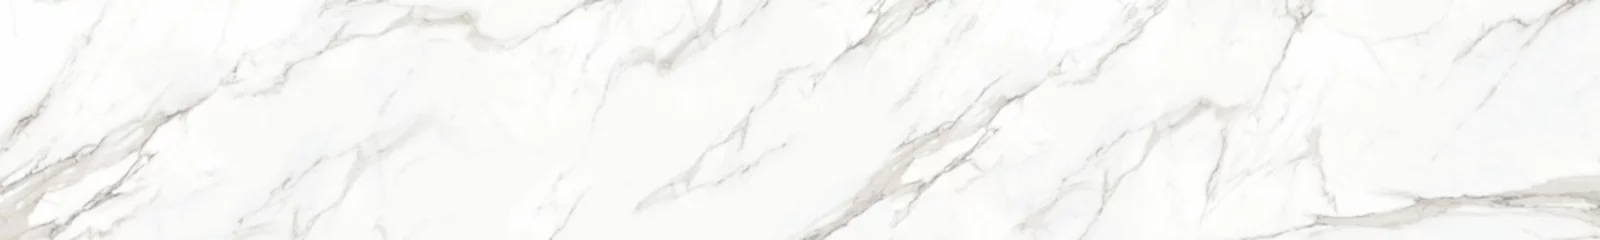 Fotobehang Marmer Panorama van witte marmeren steen